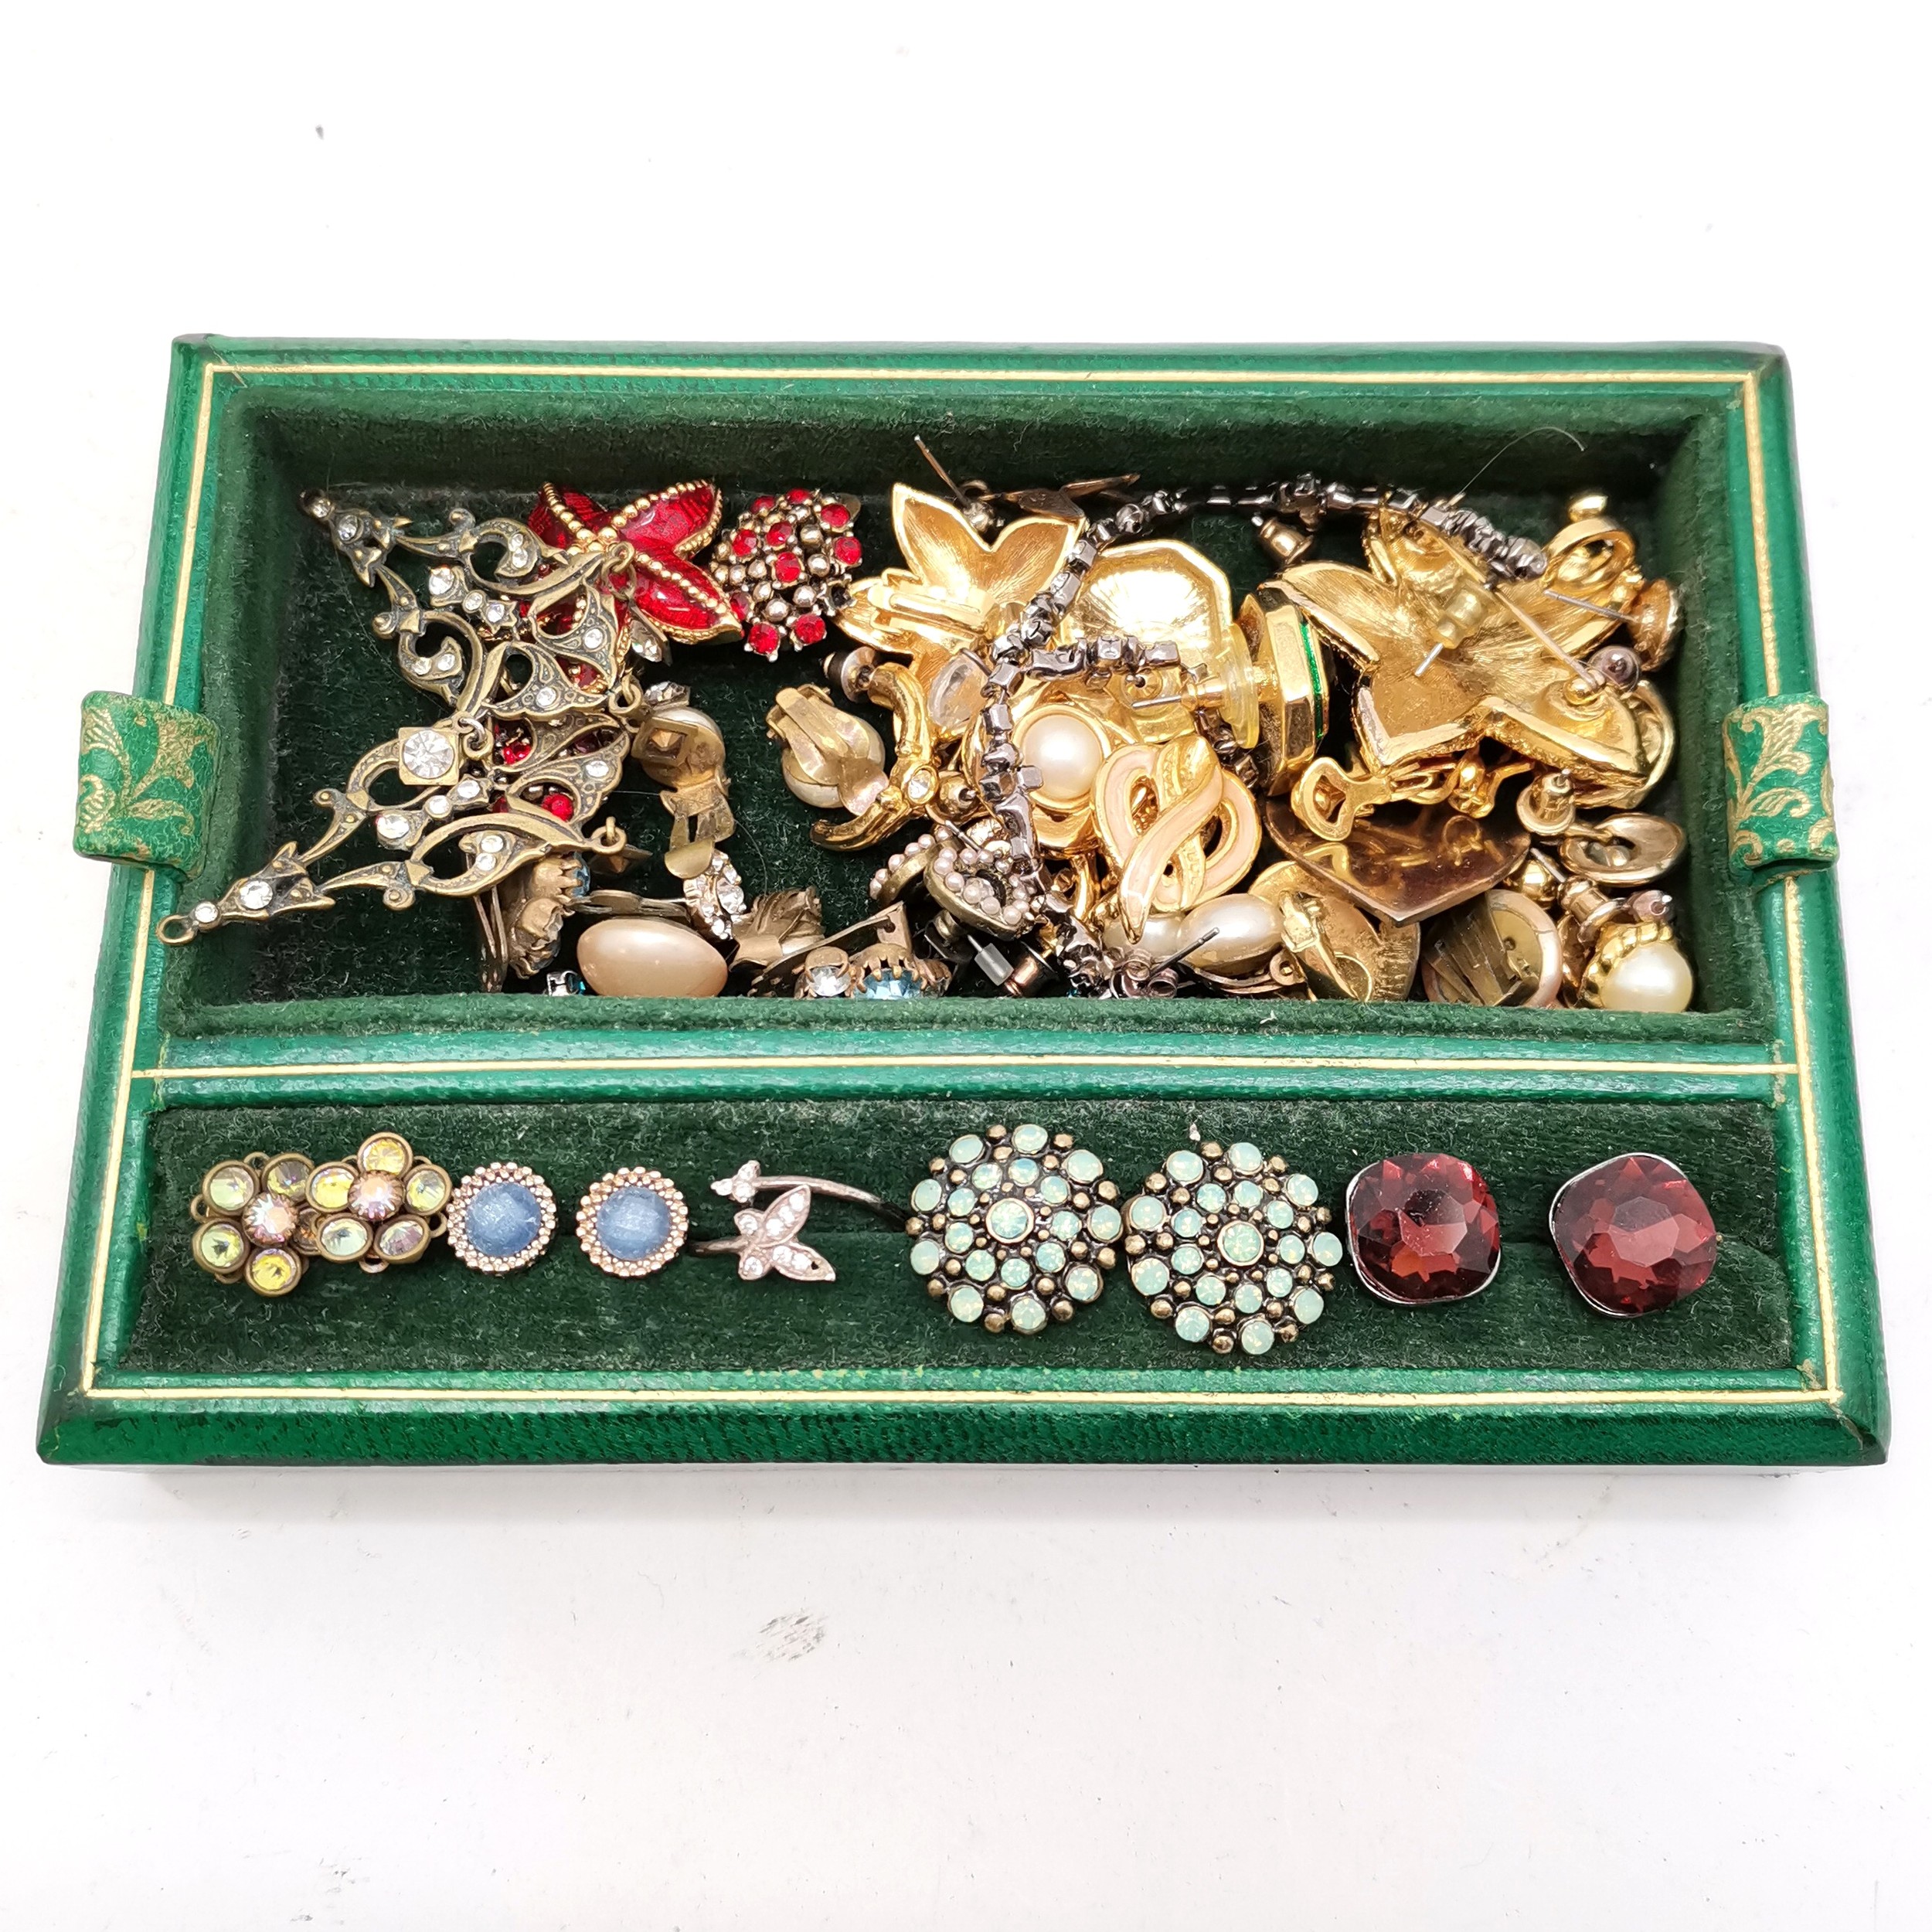 2 x vintage jewellery boxes containing costume jewellery (some antique) inc Venetian beads etc - - Image 2 of 4